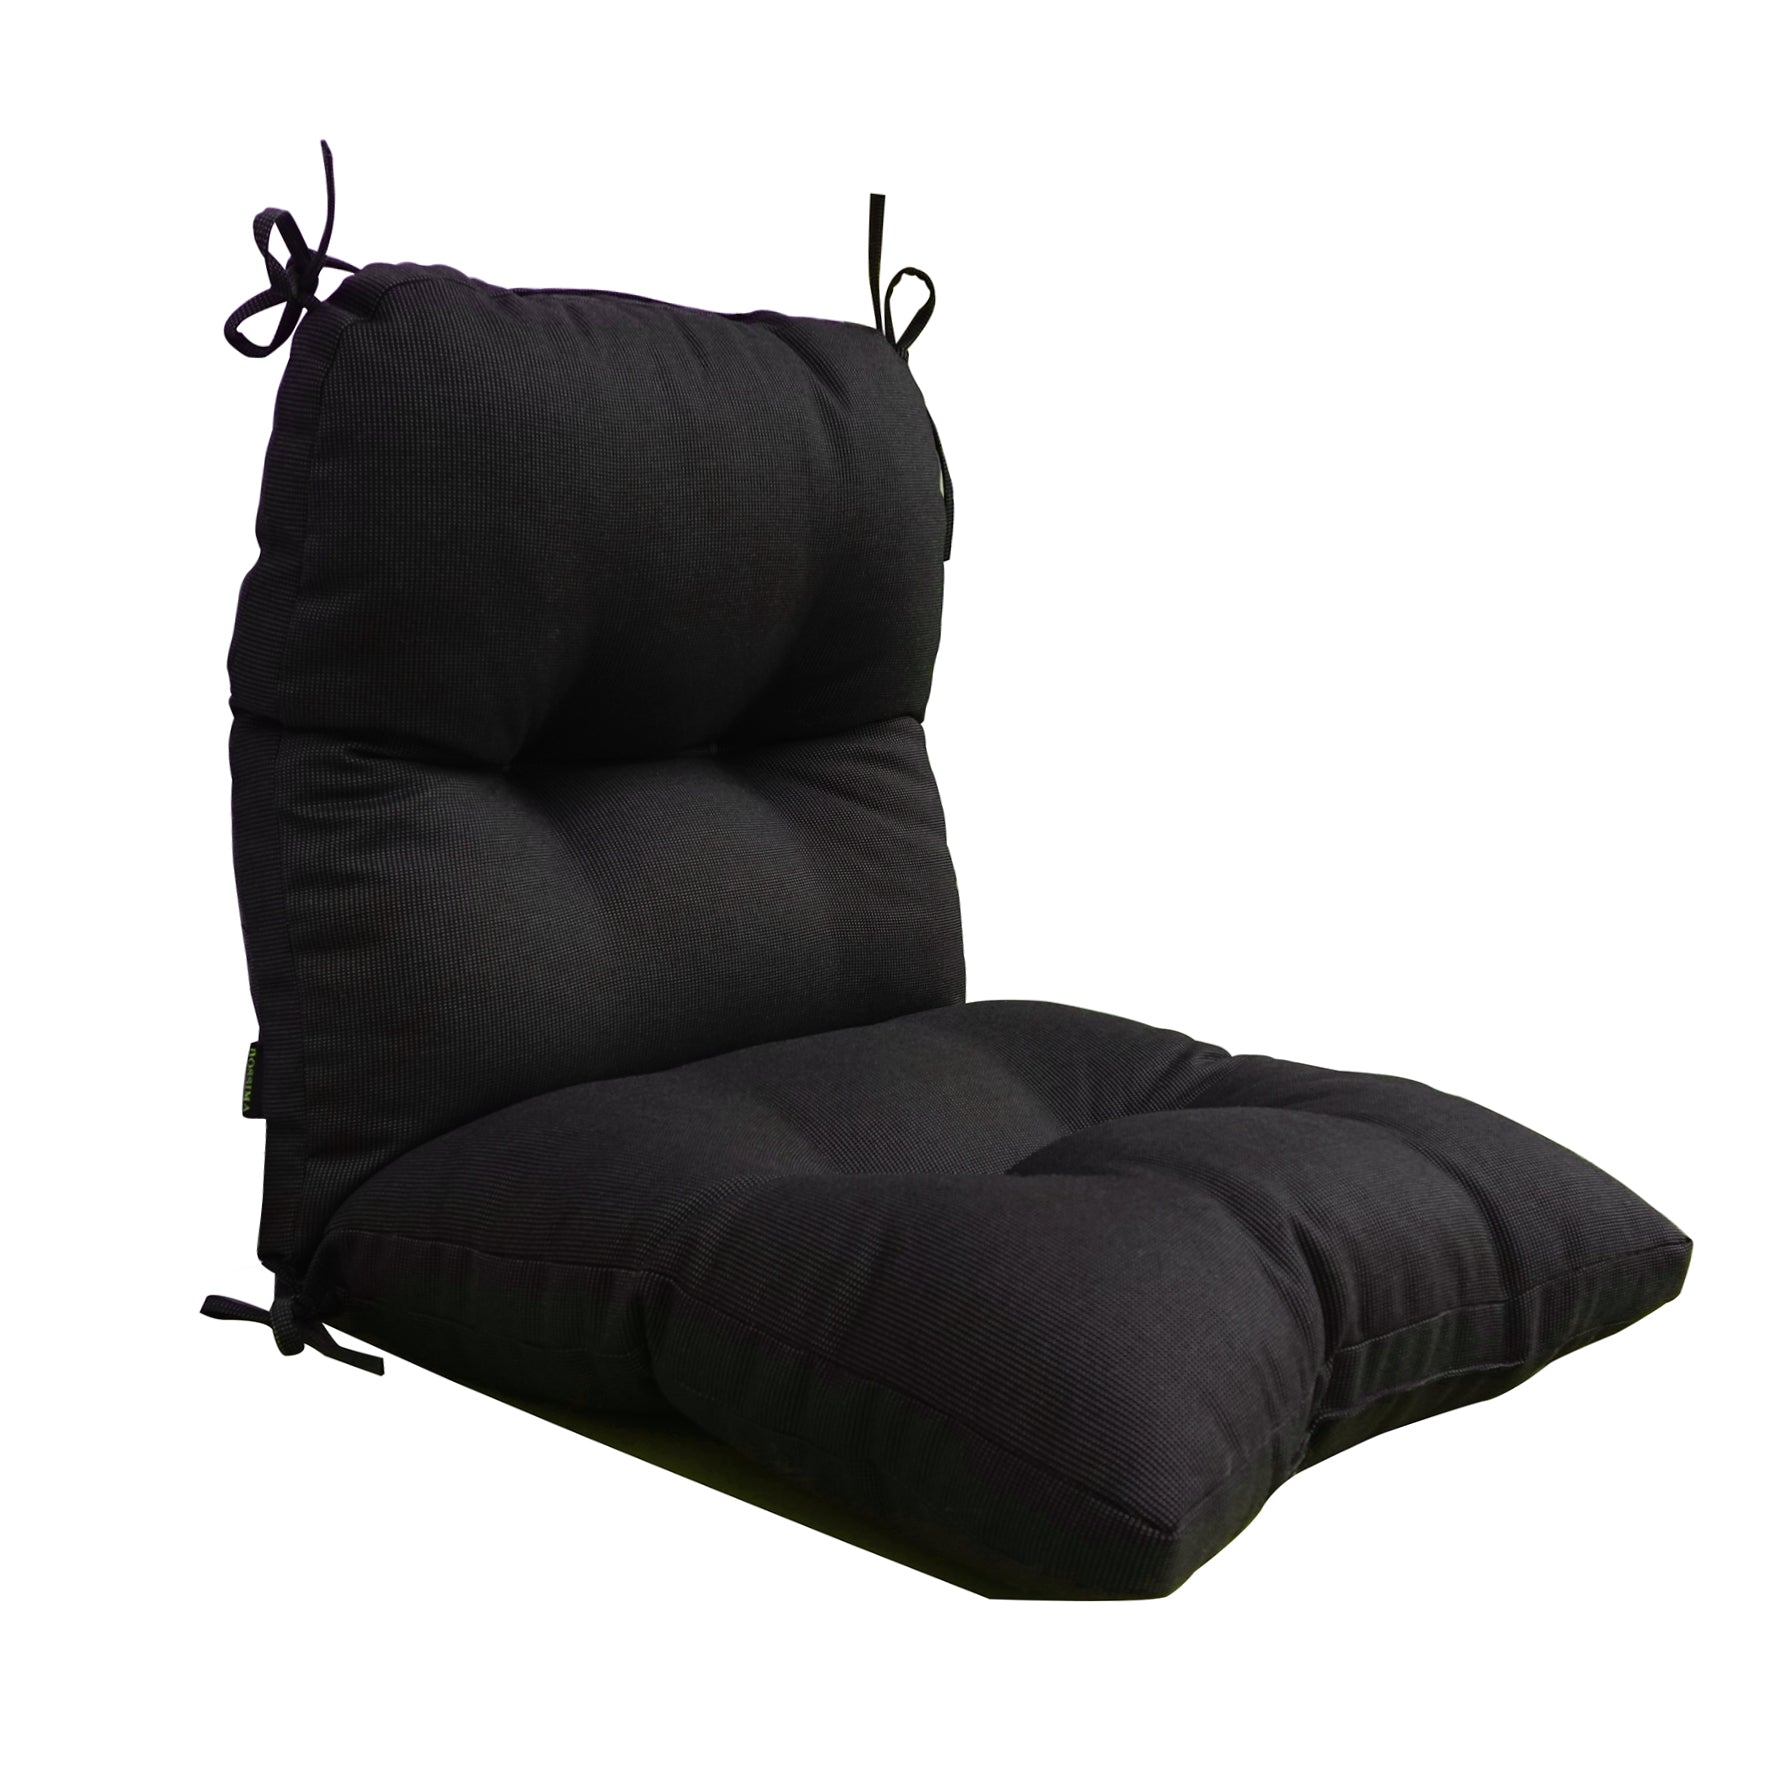 Outdoor Indoor High Back Chair Tufted Cushions Olefin Mixed Black/Grey